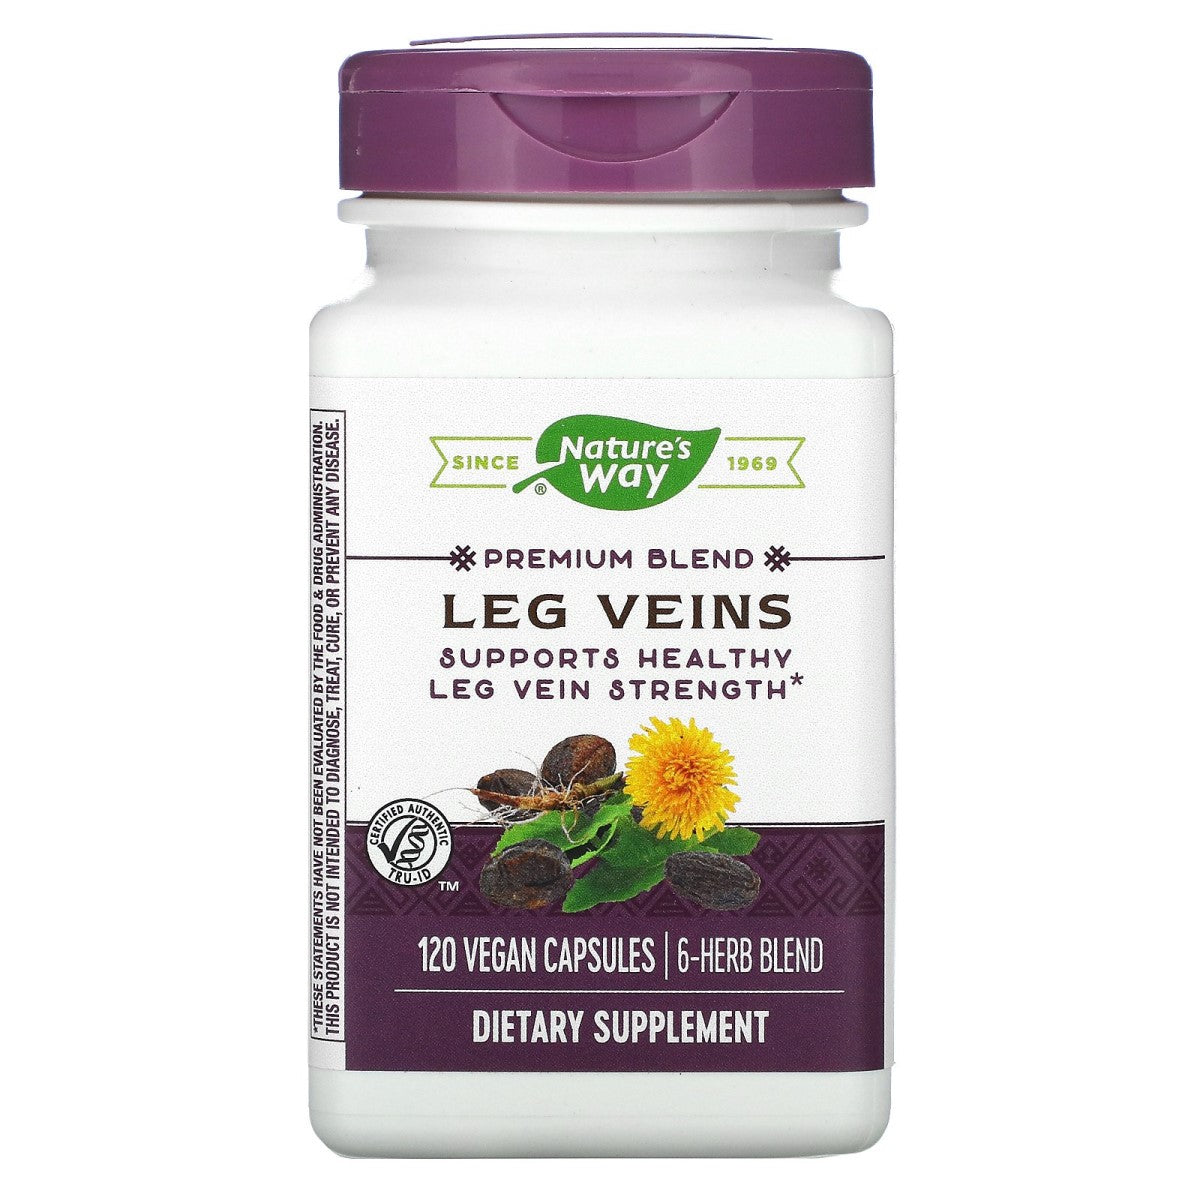 Primary image of Leg Veins